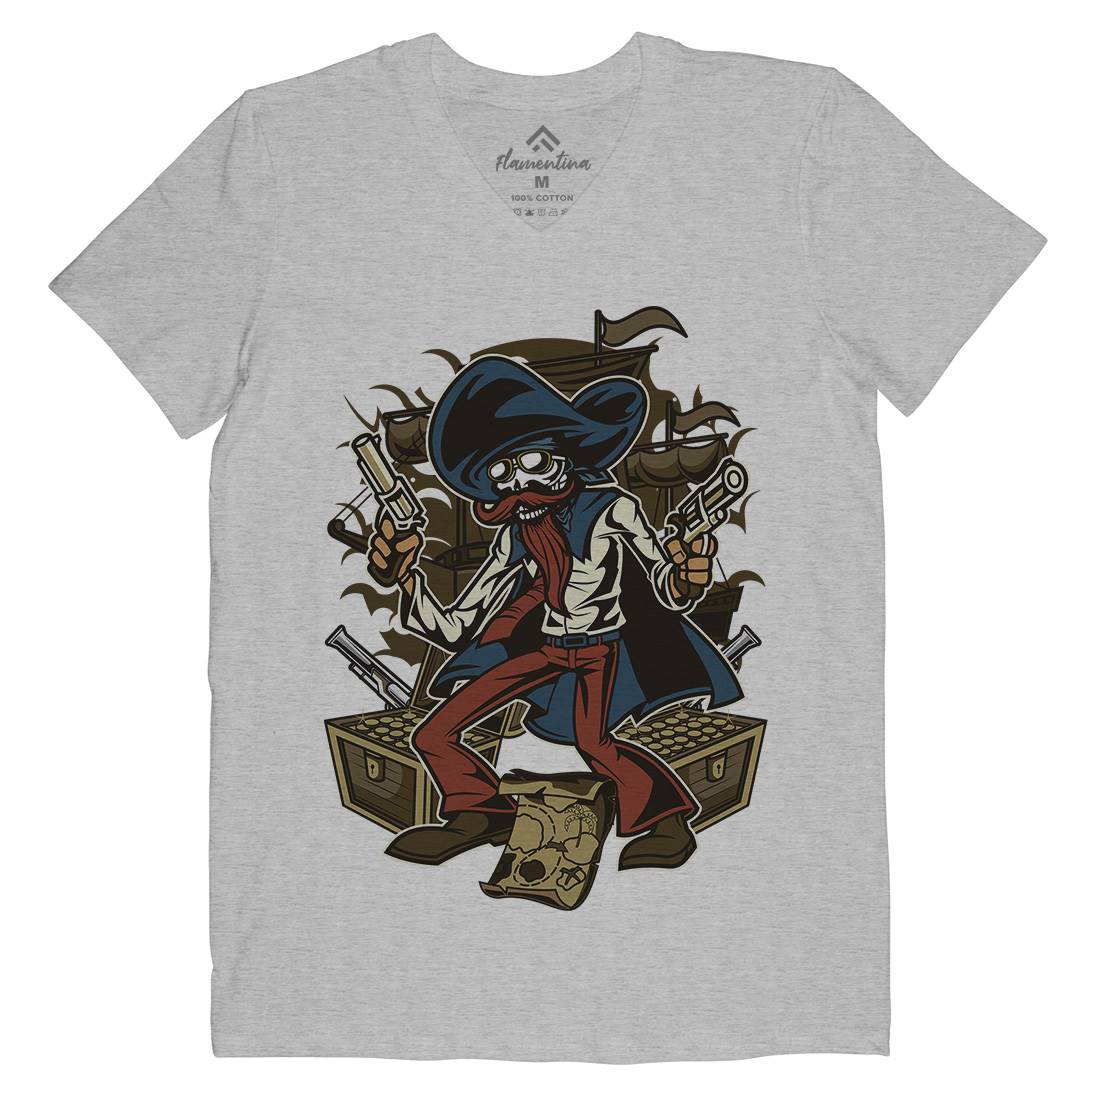 Pirate Treasure Mens Organic V-Neck T-Shirt Navy C420